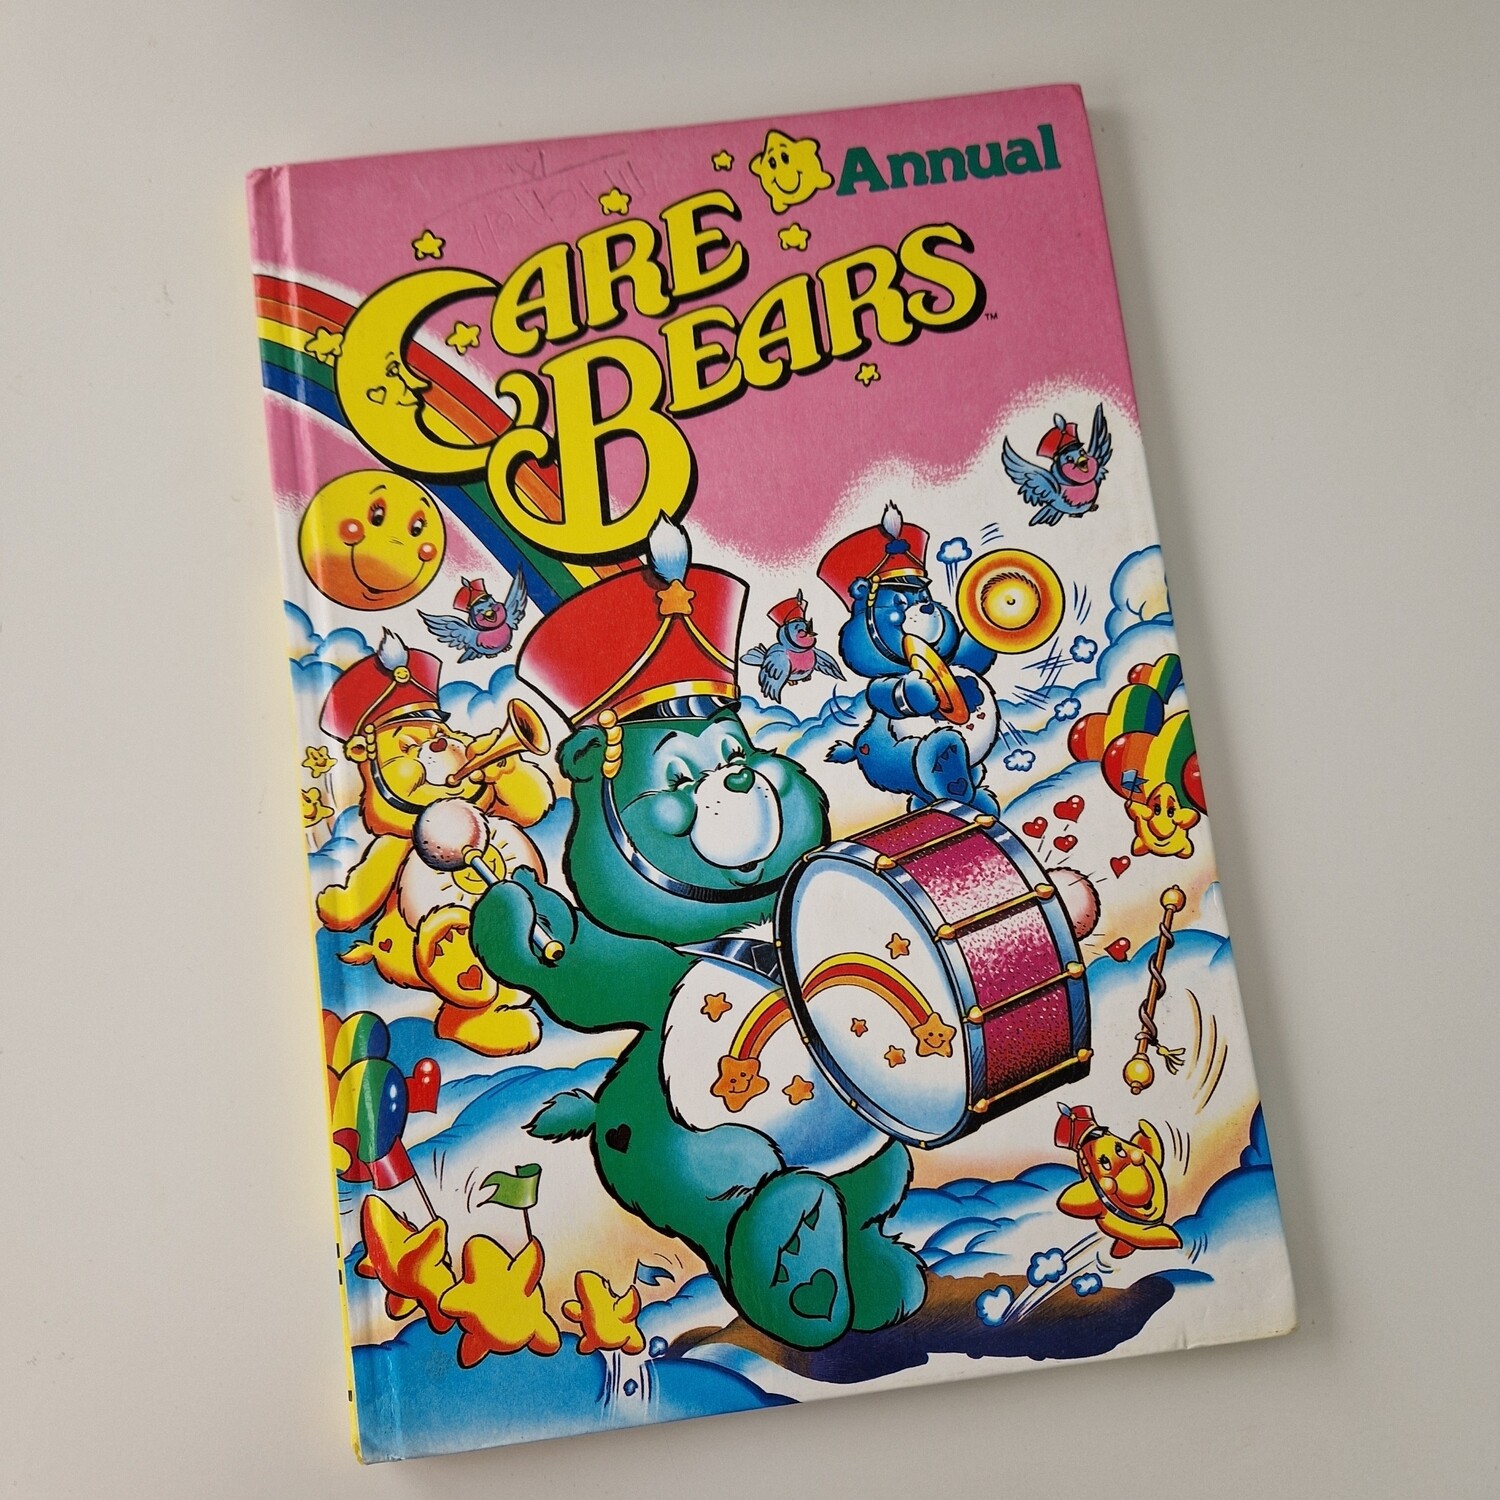 Care Bears Annual 1987